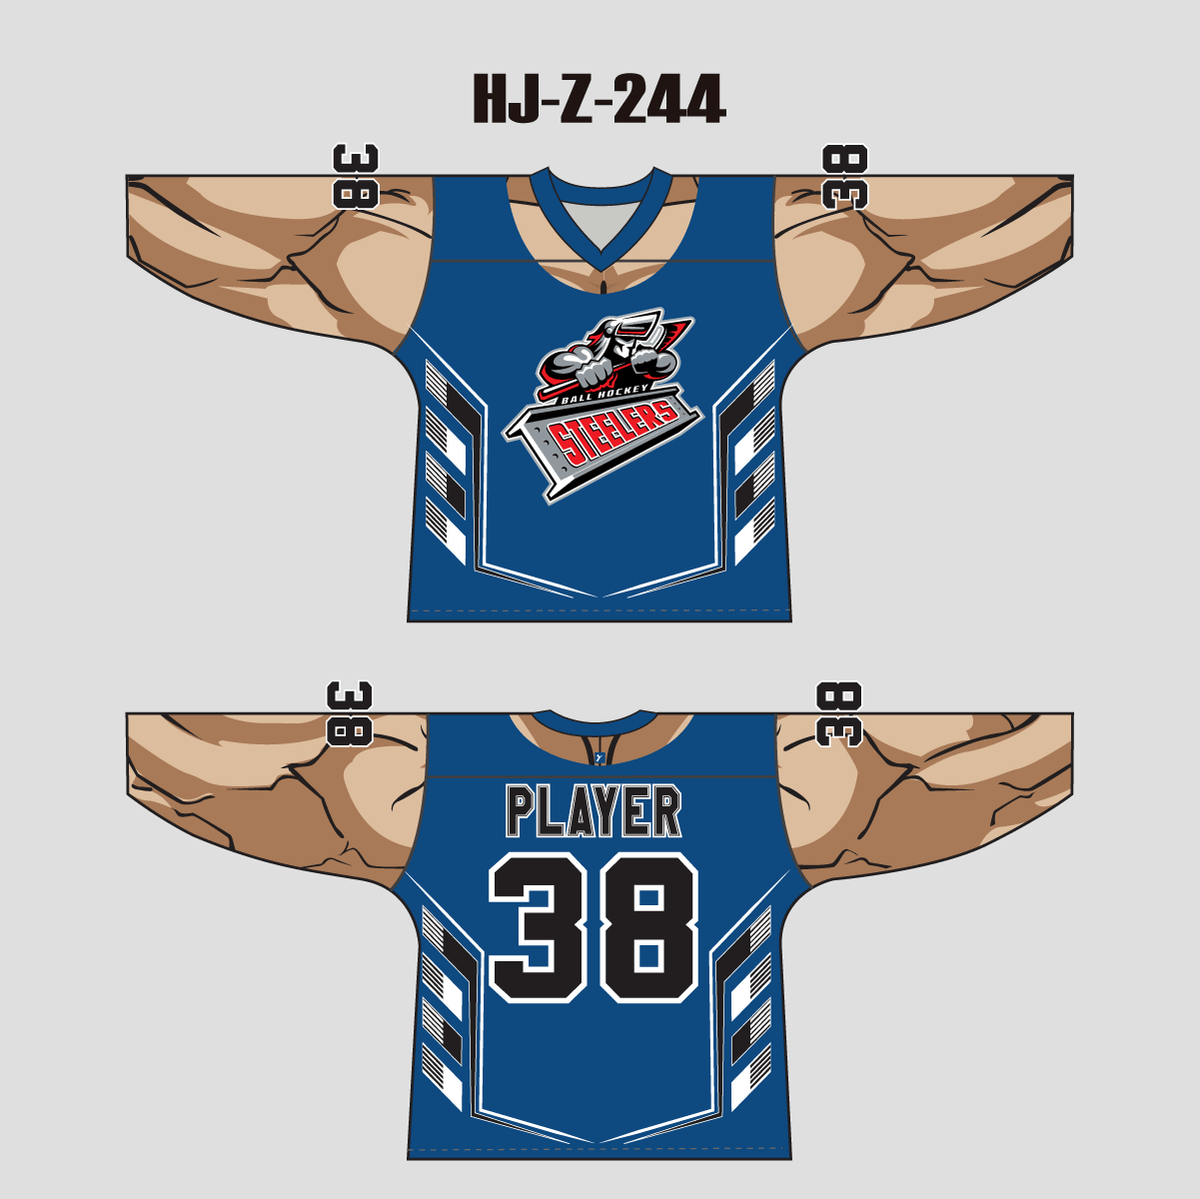 Musky Shop Custom Hockey Jersey 3XL